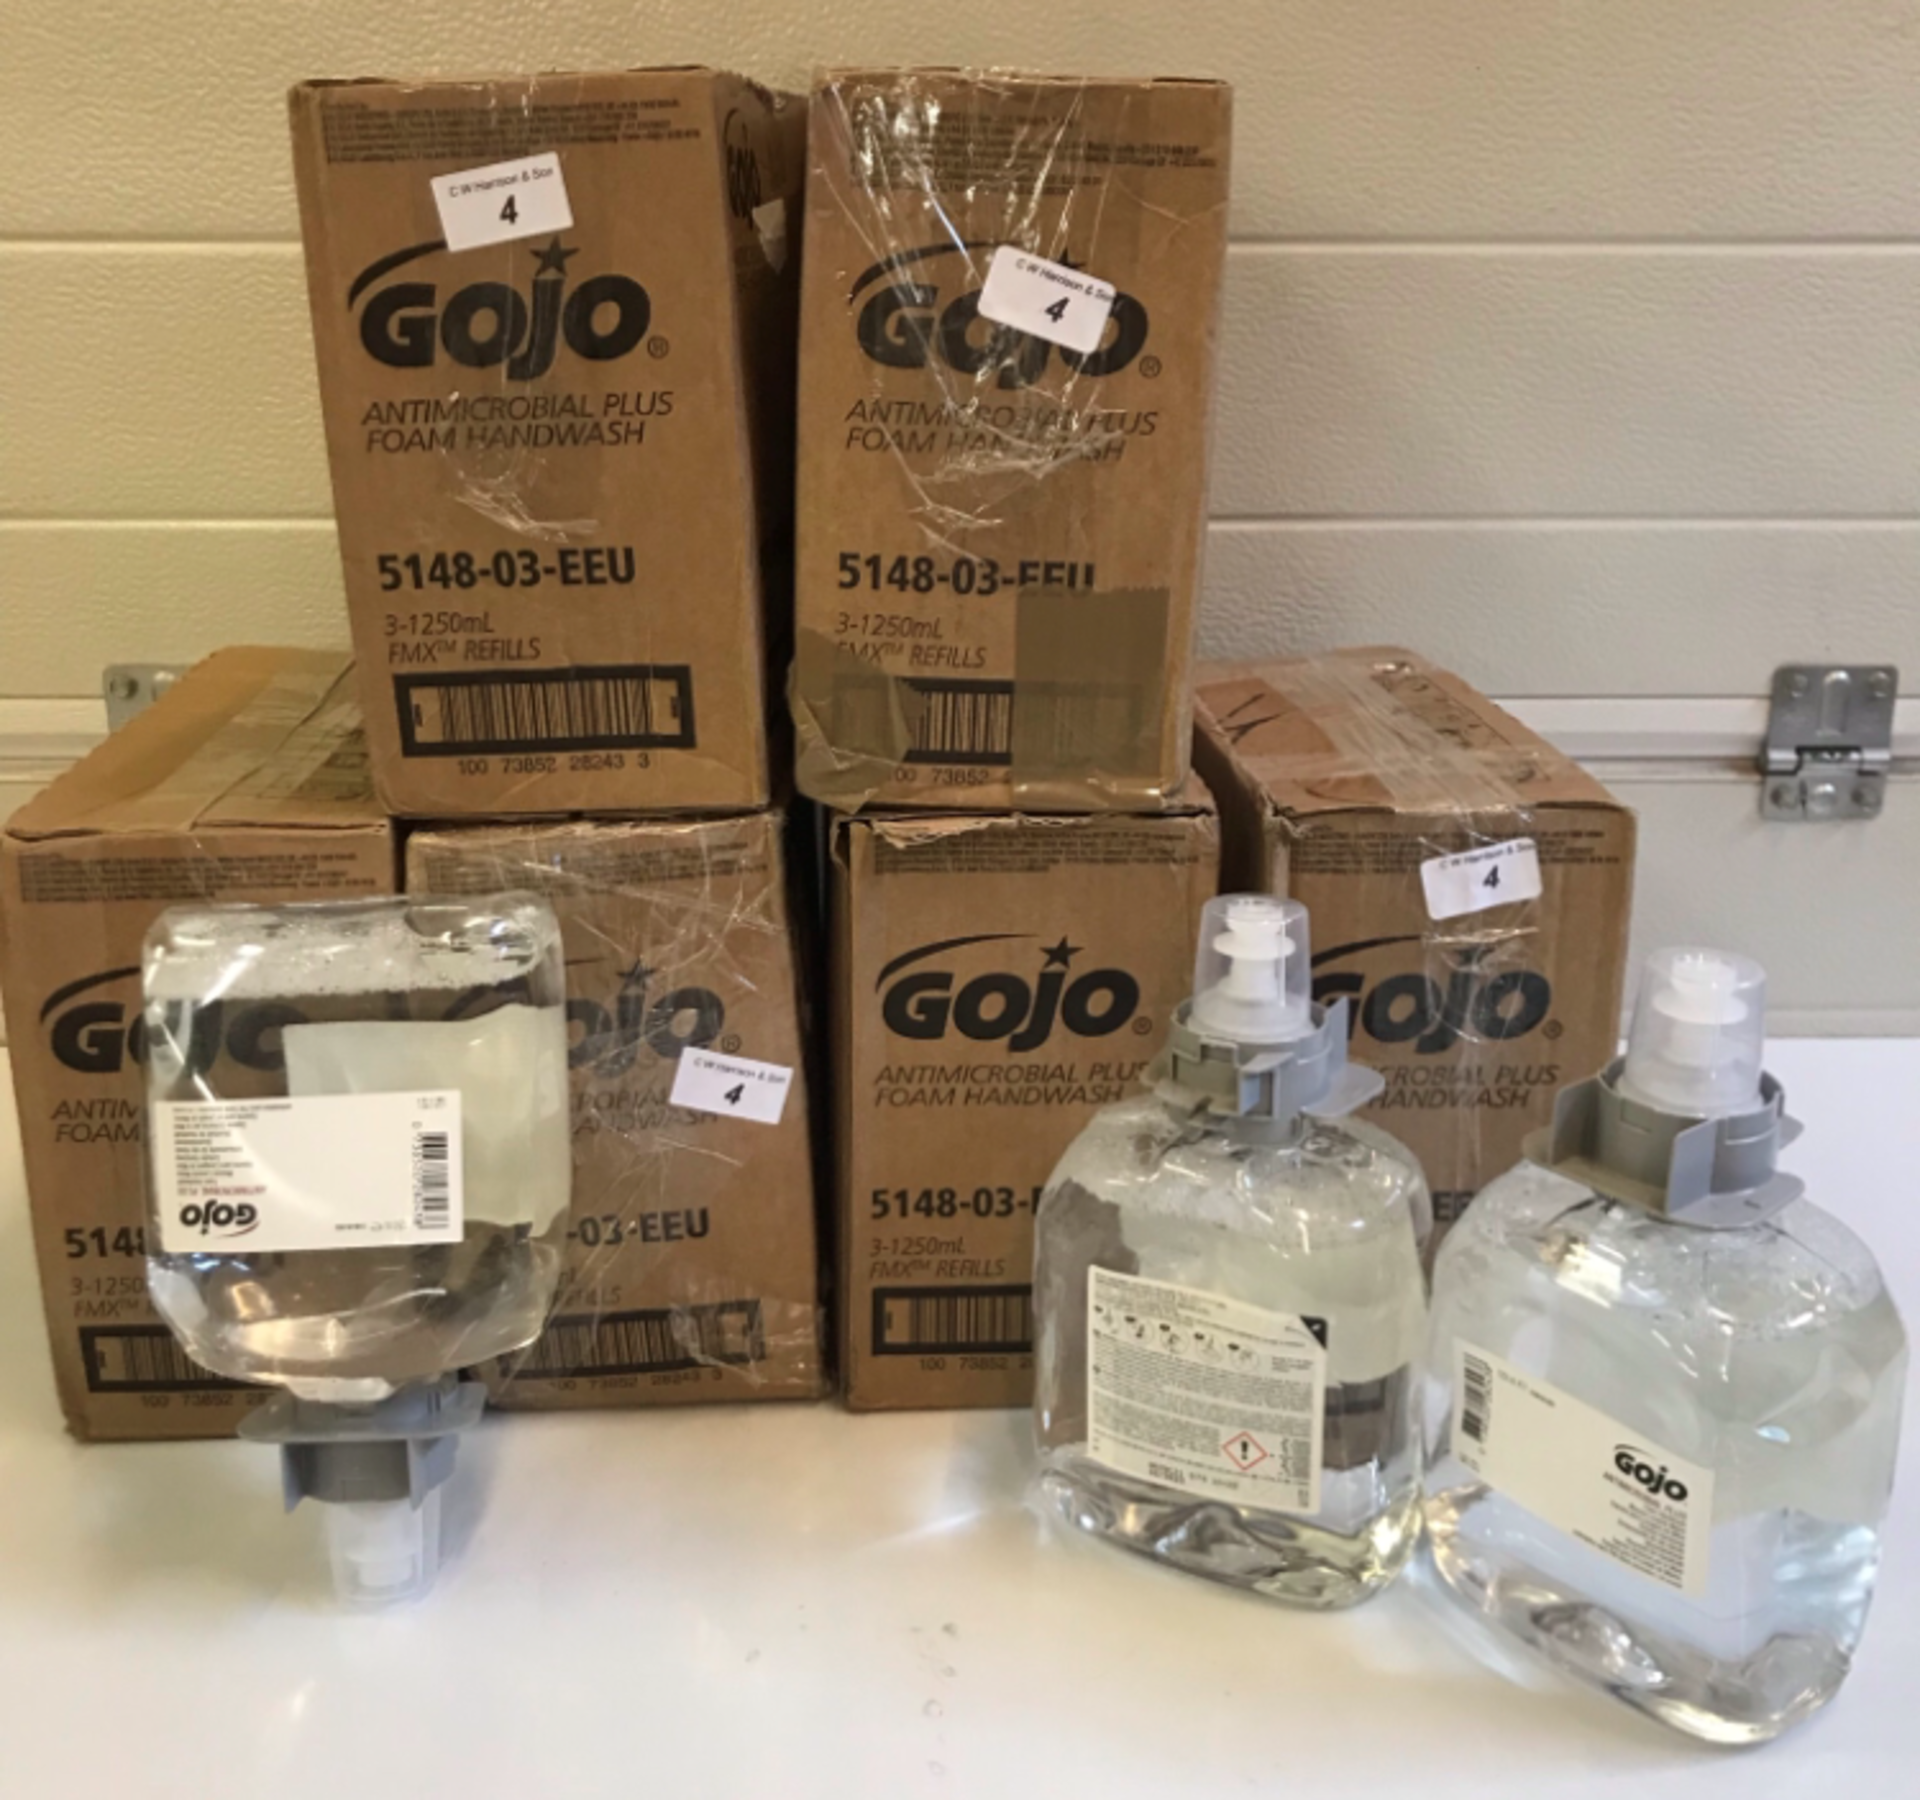 7 boxes of 3 x 1250ml GoJo Antimicrobial Plus foam handwash refill for FMX-12 dispenser - exp